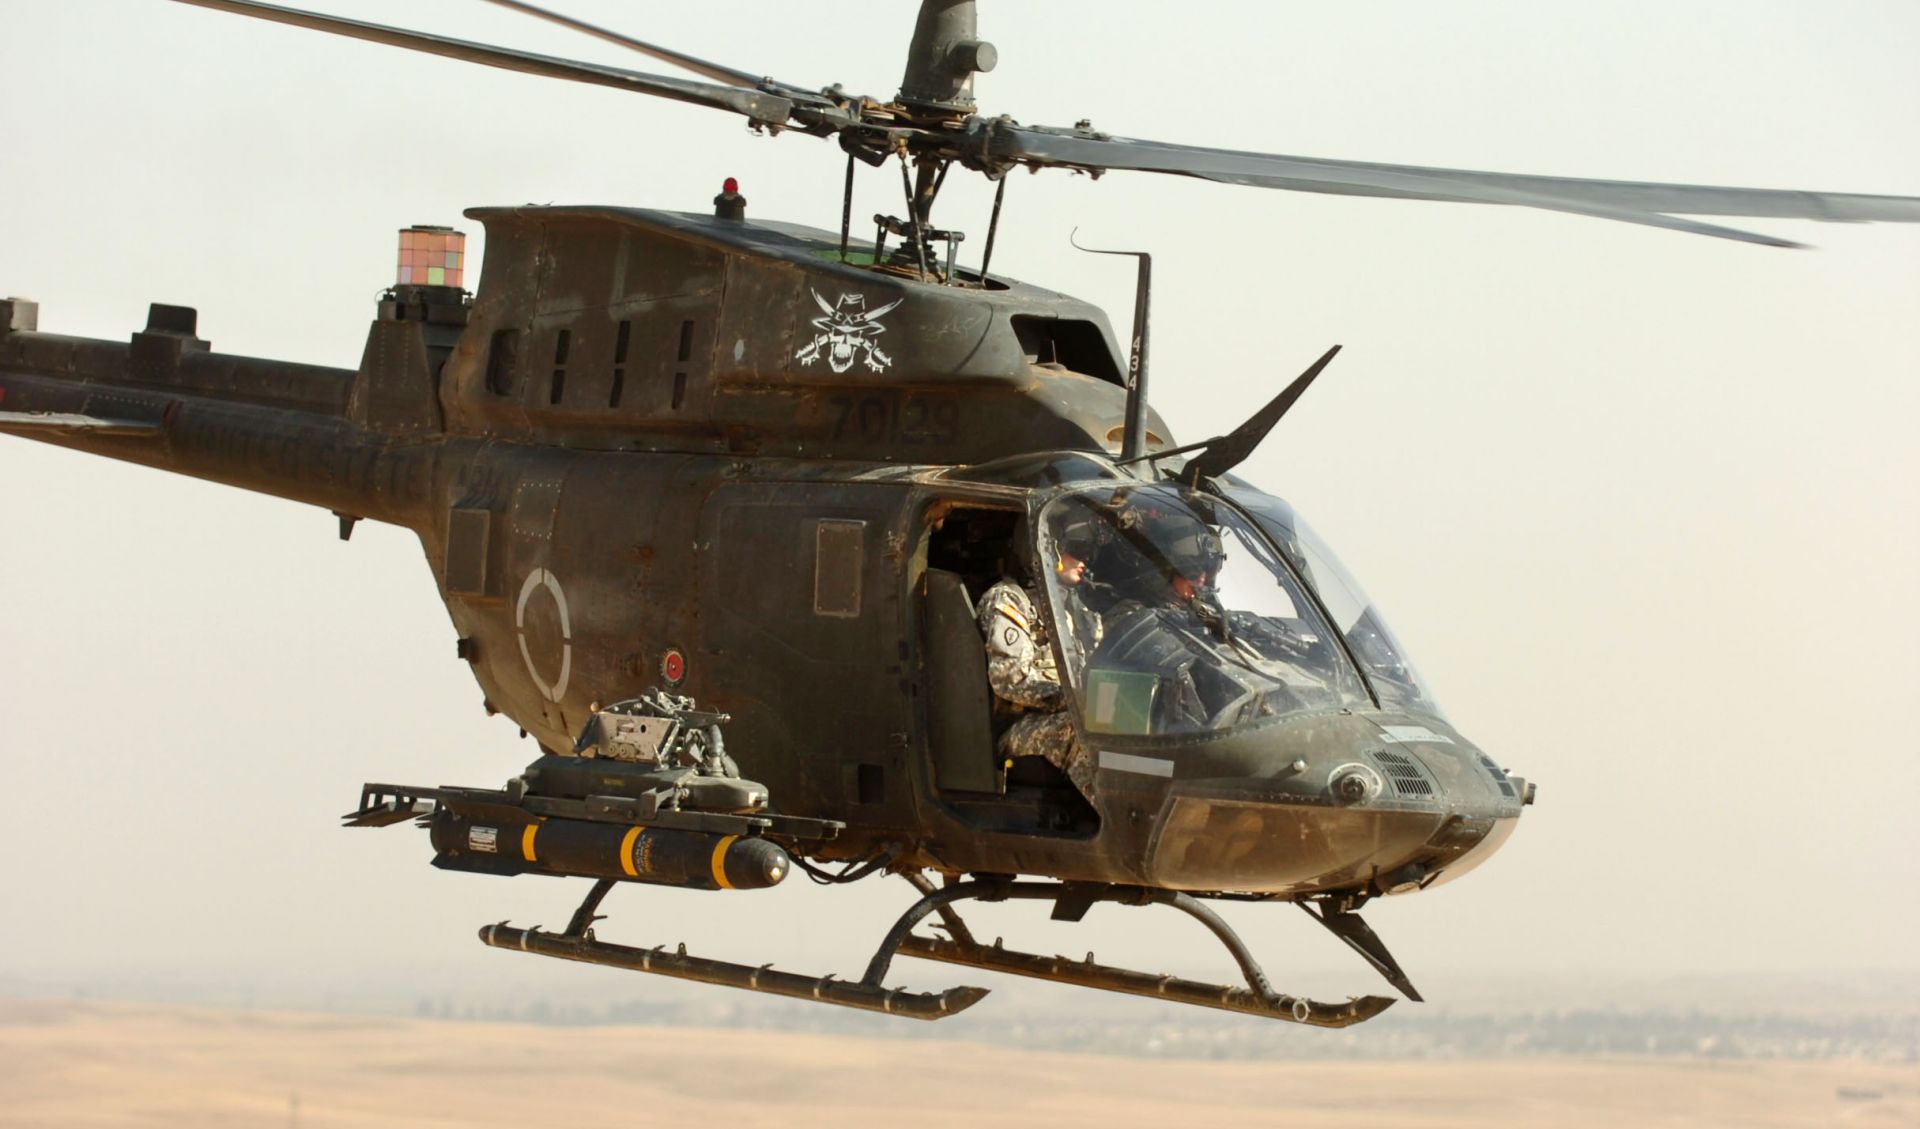 OH-58D Kiowa Warrior